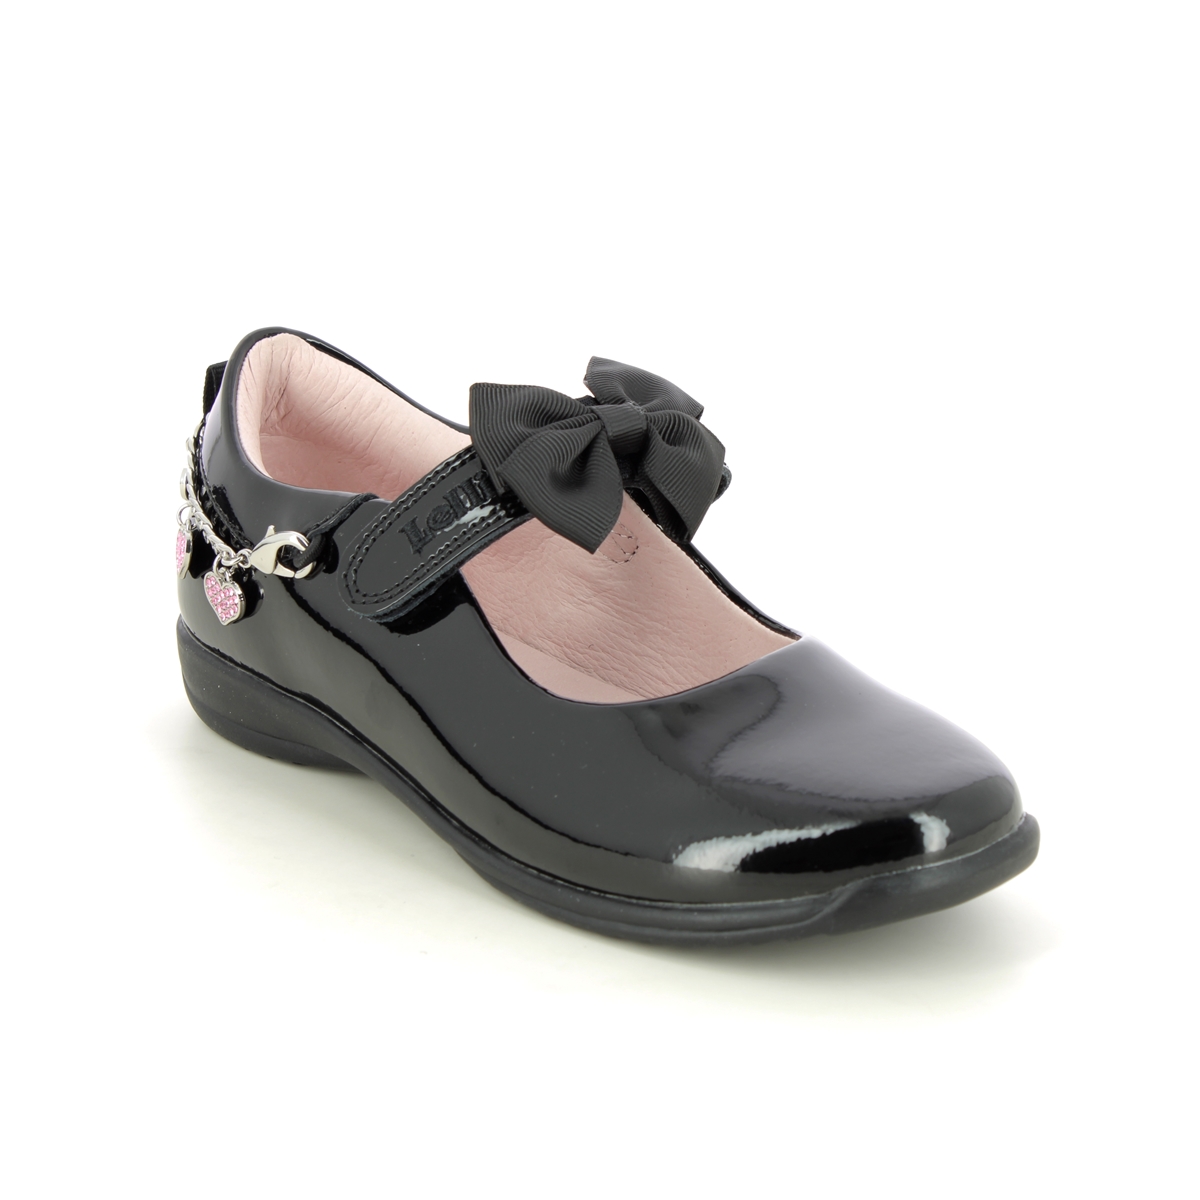 Lelli Kelly - Angel Bracelet F In Black Patent Lk8224-Db01 In Size 29 In Plain Black Patent Girls Shoes  In Black Patent For School For kids